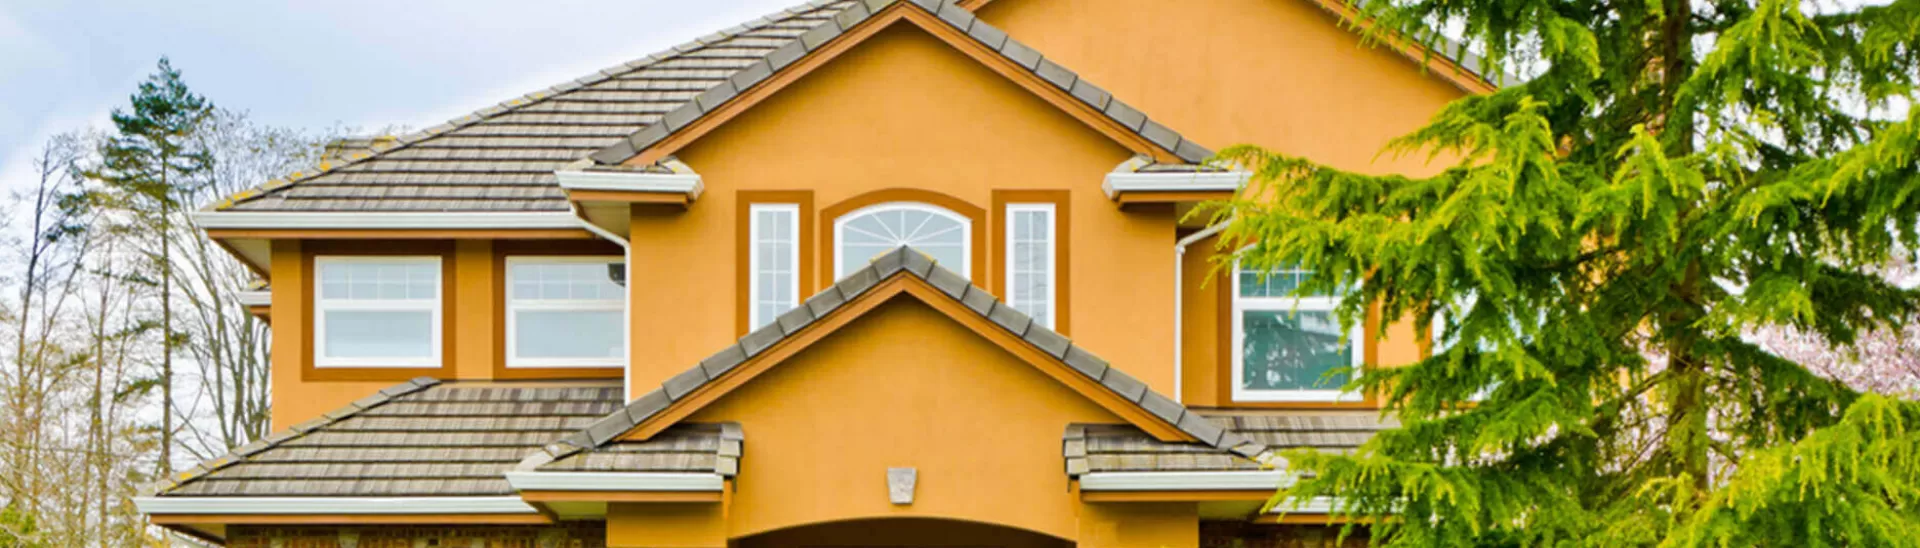 Exterior Home Paint: Enhance Your Home's Grandeur This Festive Season